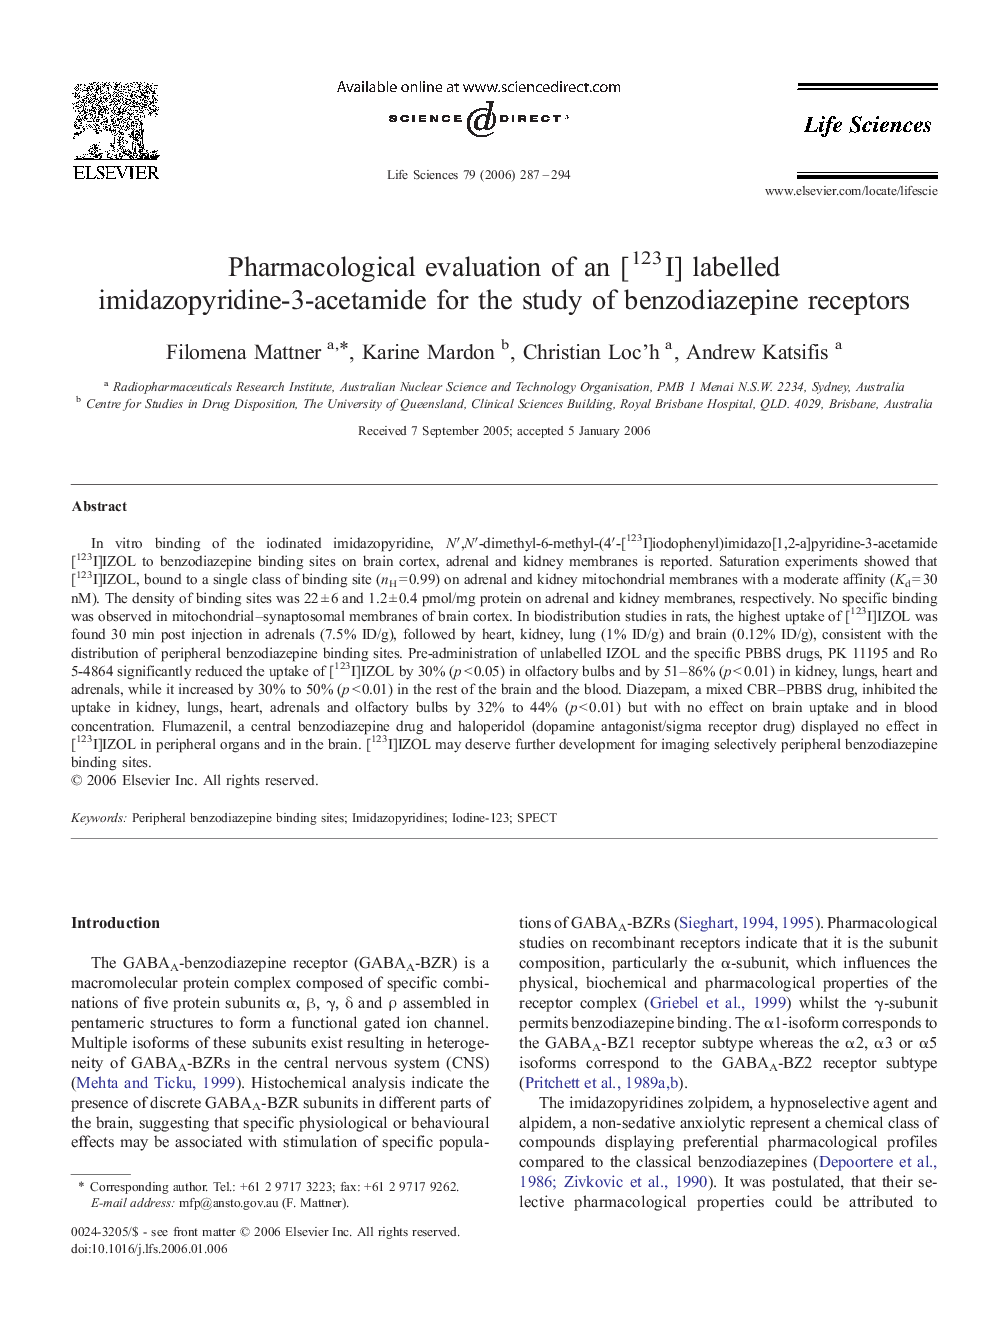 Pharmacological evaluation of an [123I] labelled imidazopyridine-3-acetamide for the study of benzodiazepine receptors